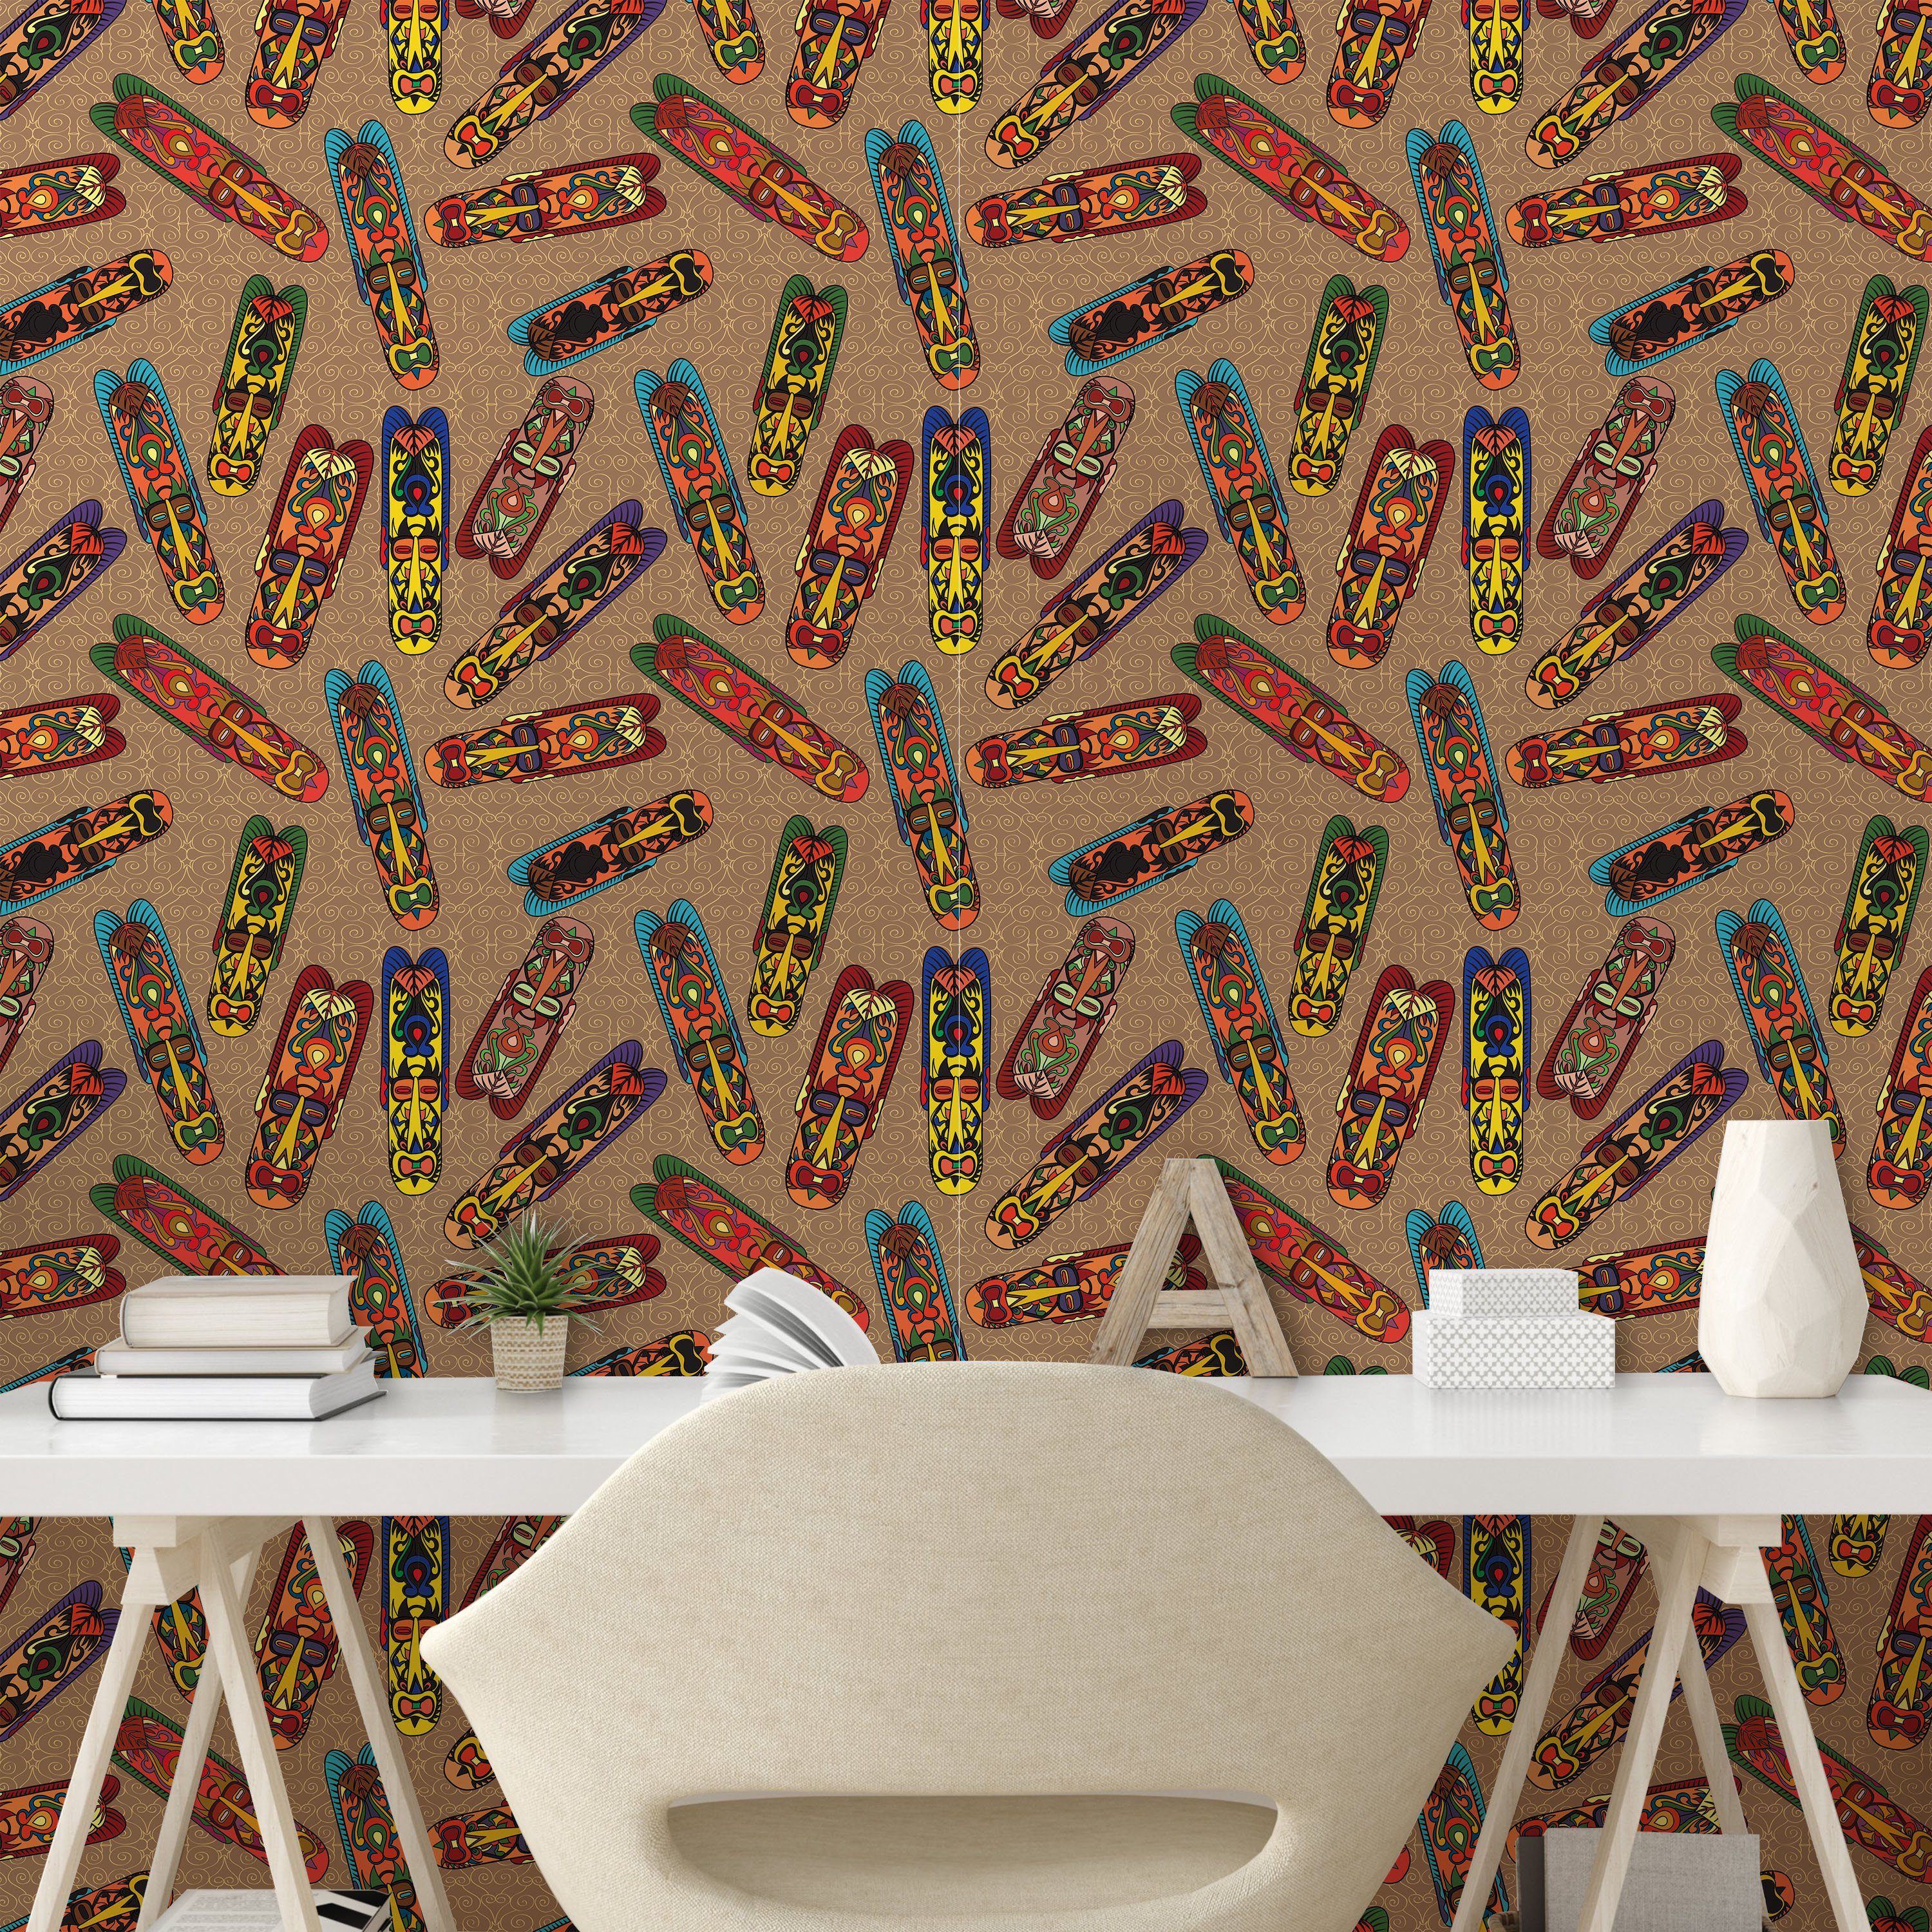 Abakuhaus Totem selbstklebendes Wohnzimmer Vinyltapete Küchenakzent, Bakongo afrikanisch Masken